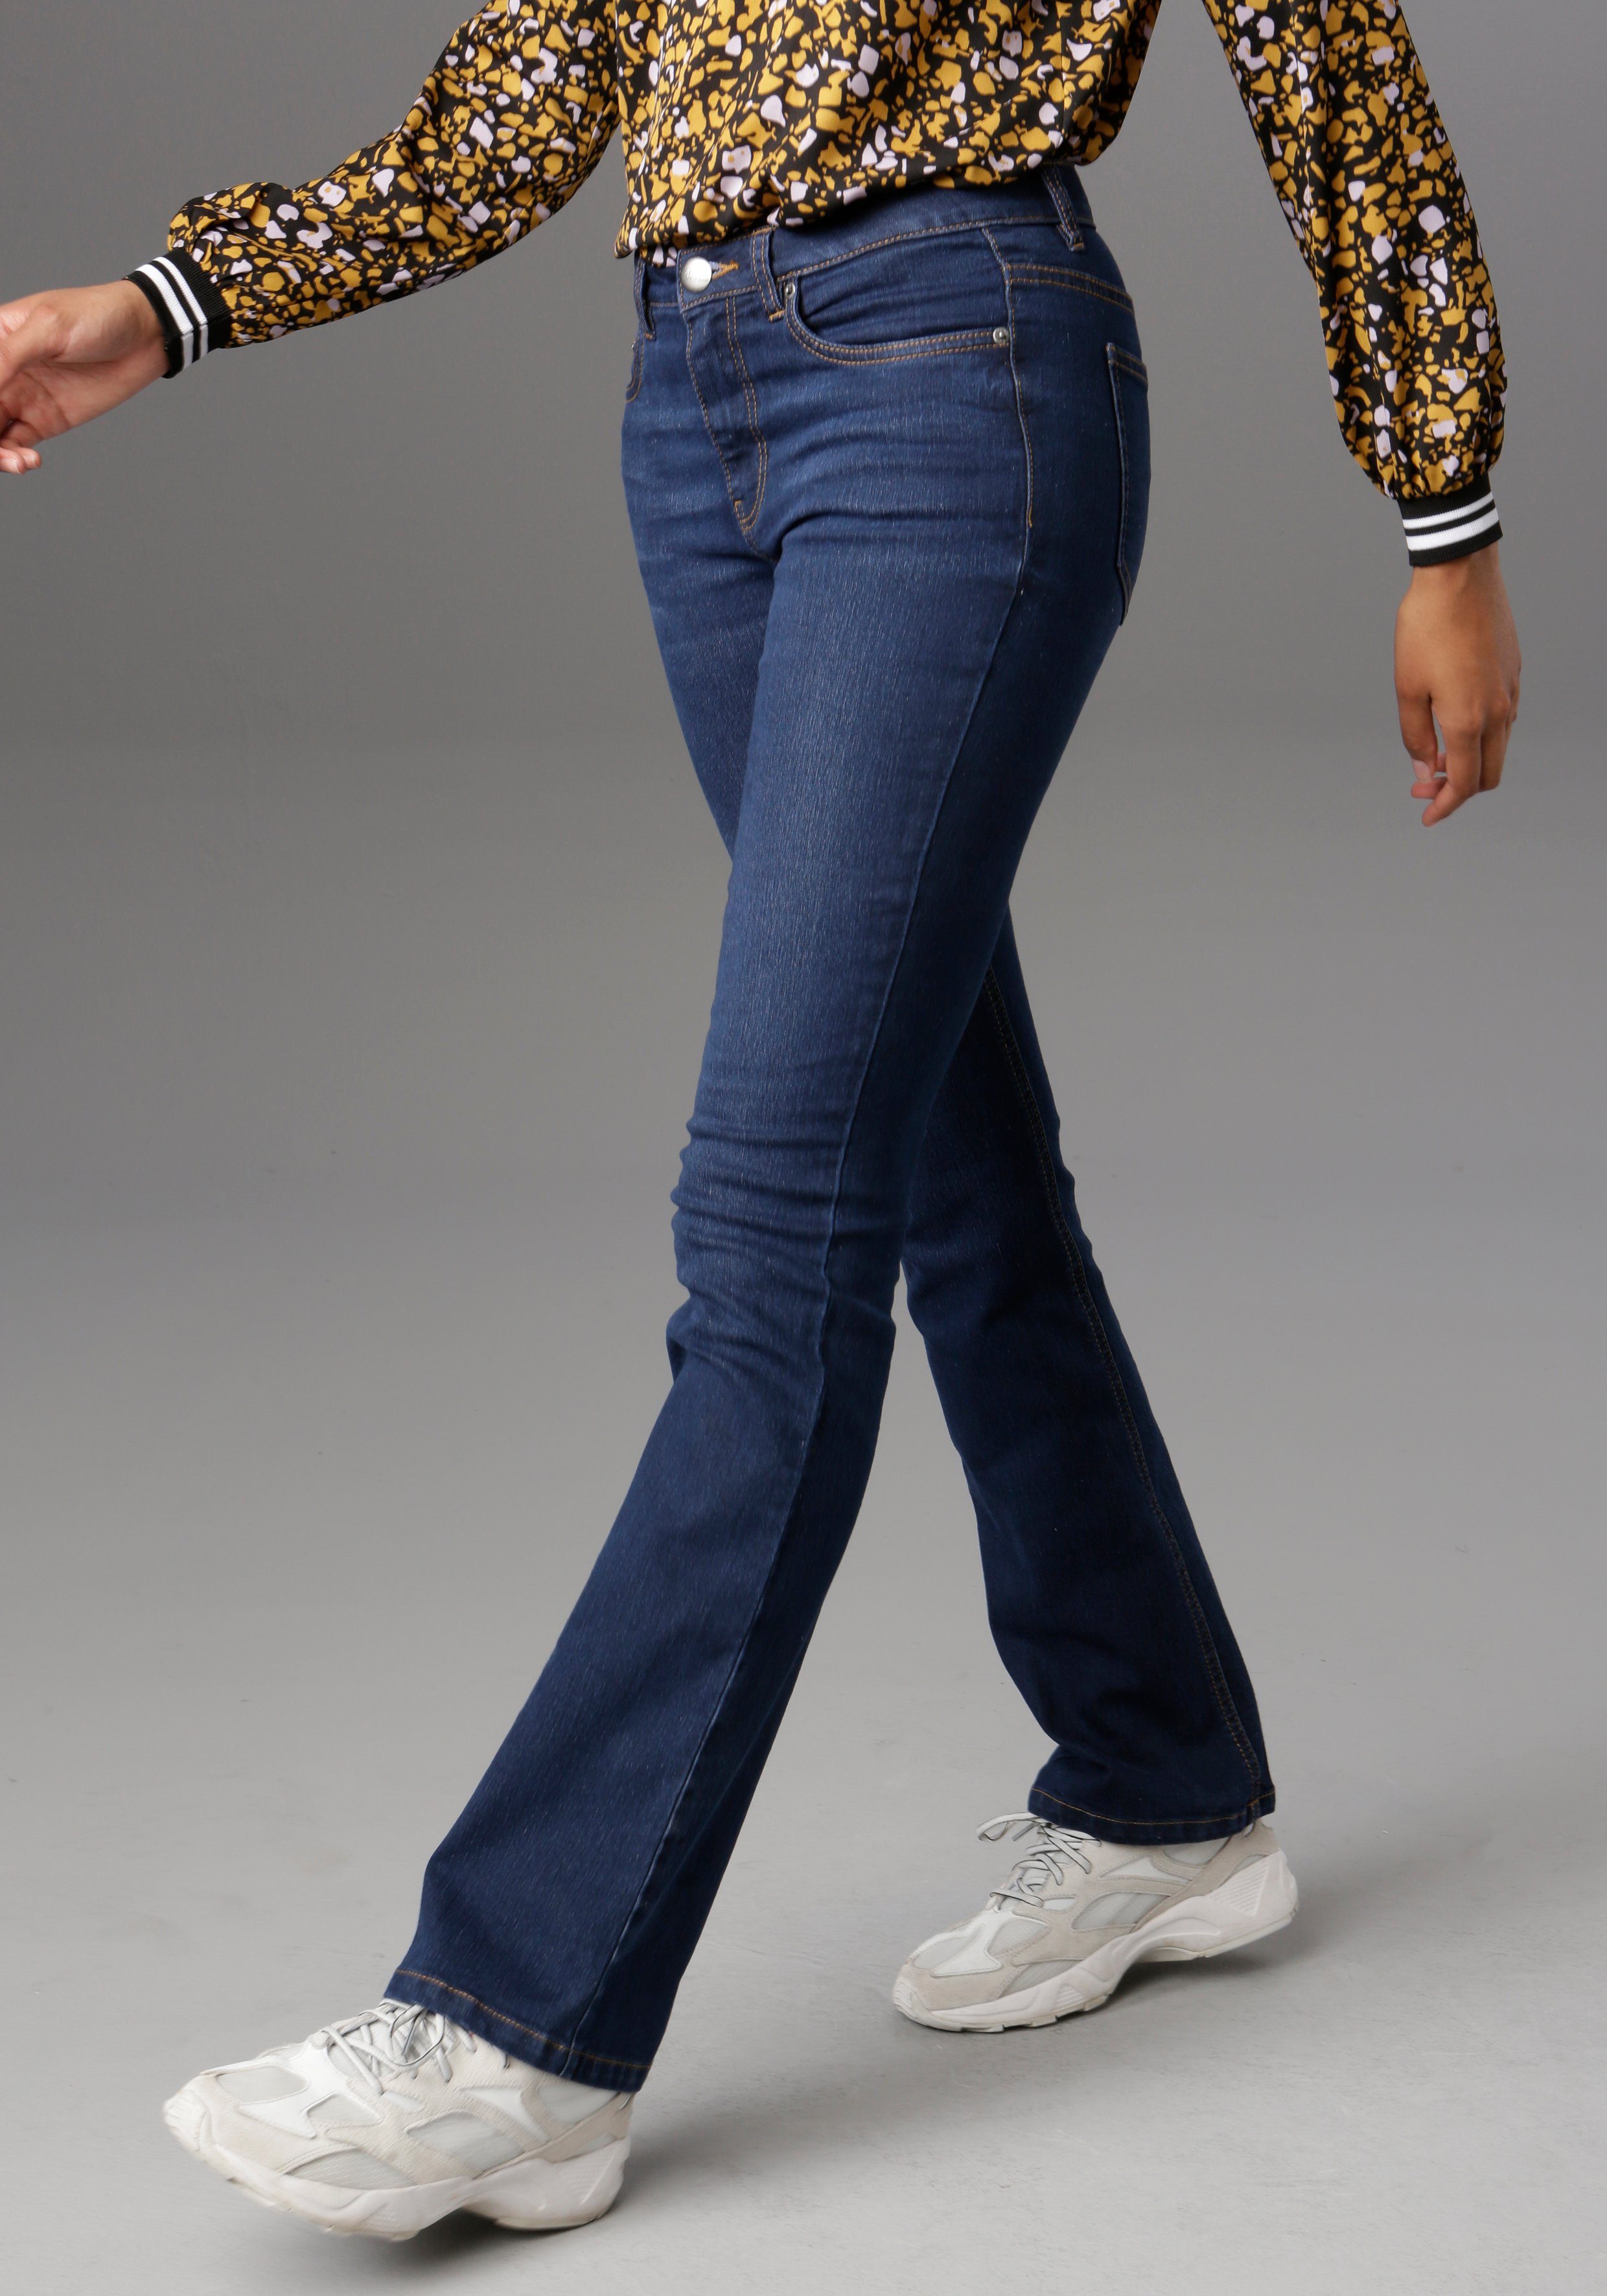 Mode Spijkerbroeken Hoge taille jeans Hoge taille jeans lichtgrijs casual uitstraling 